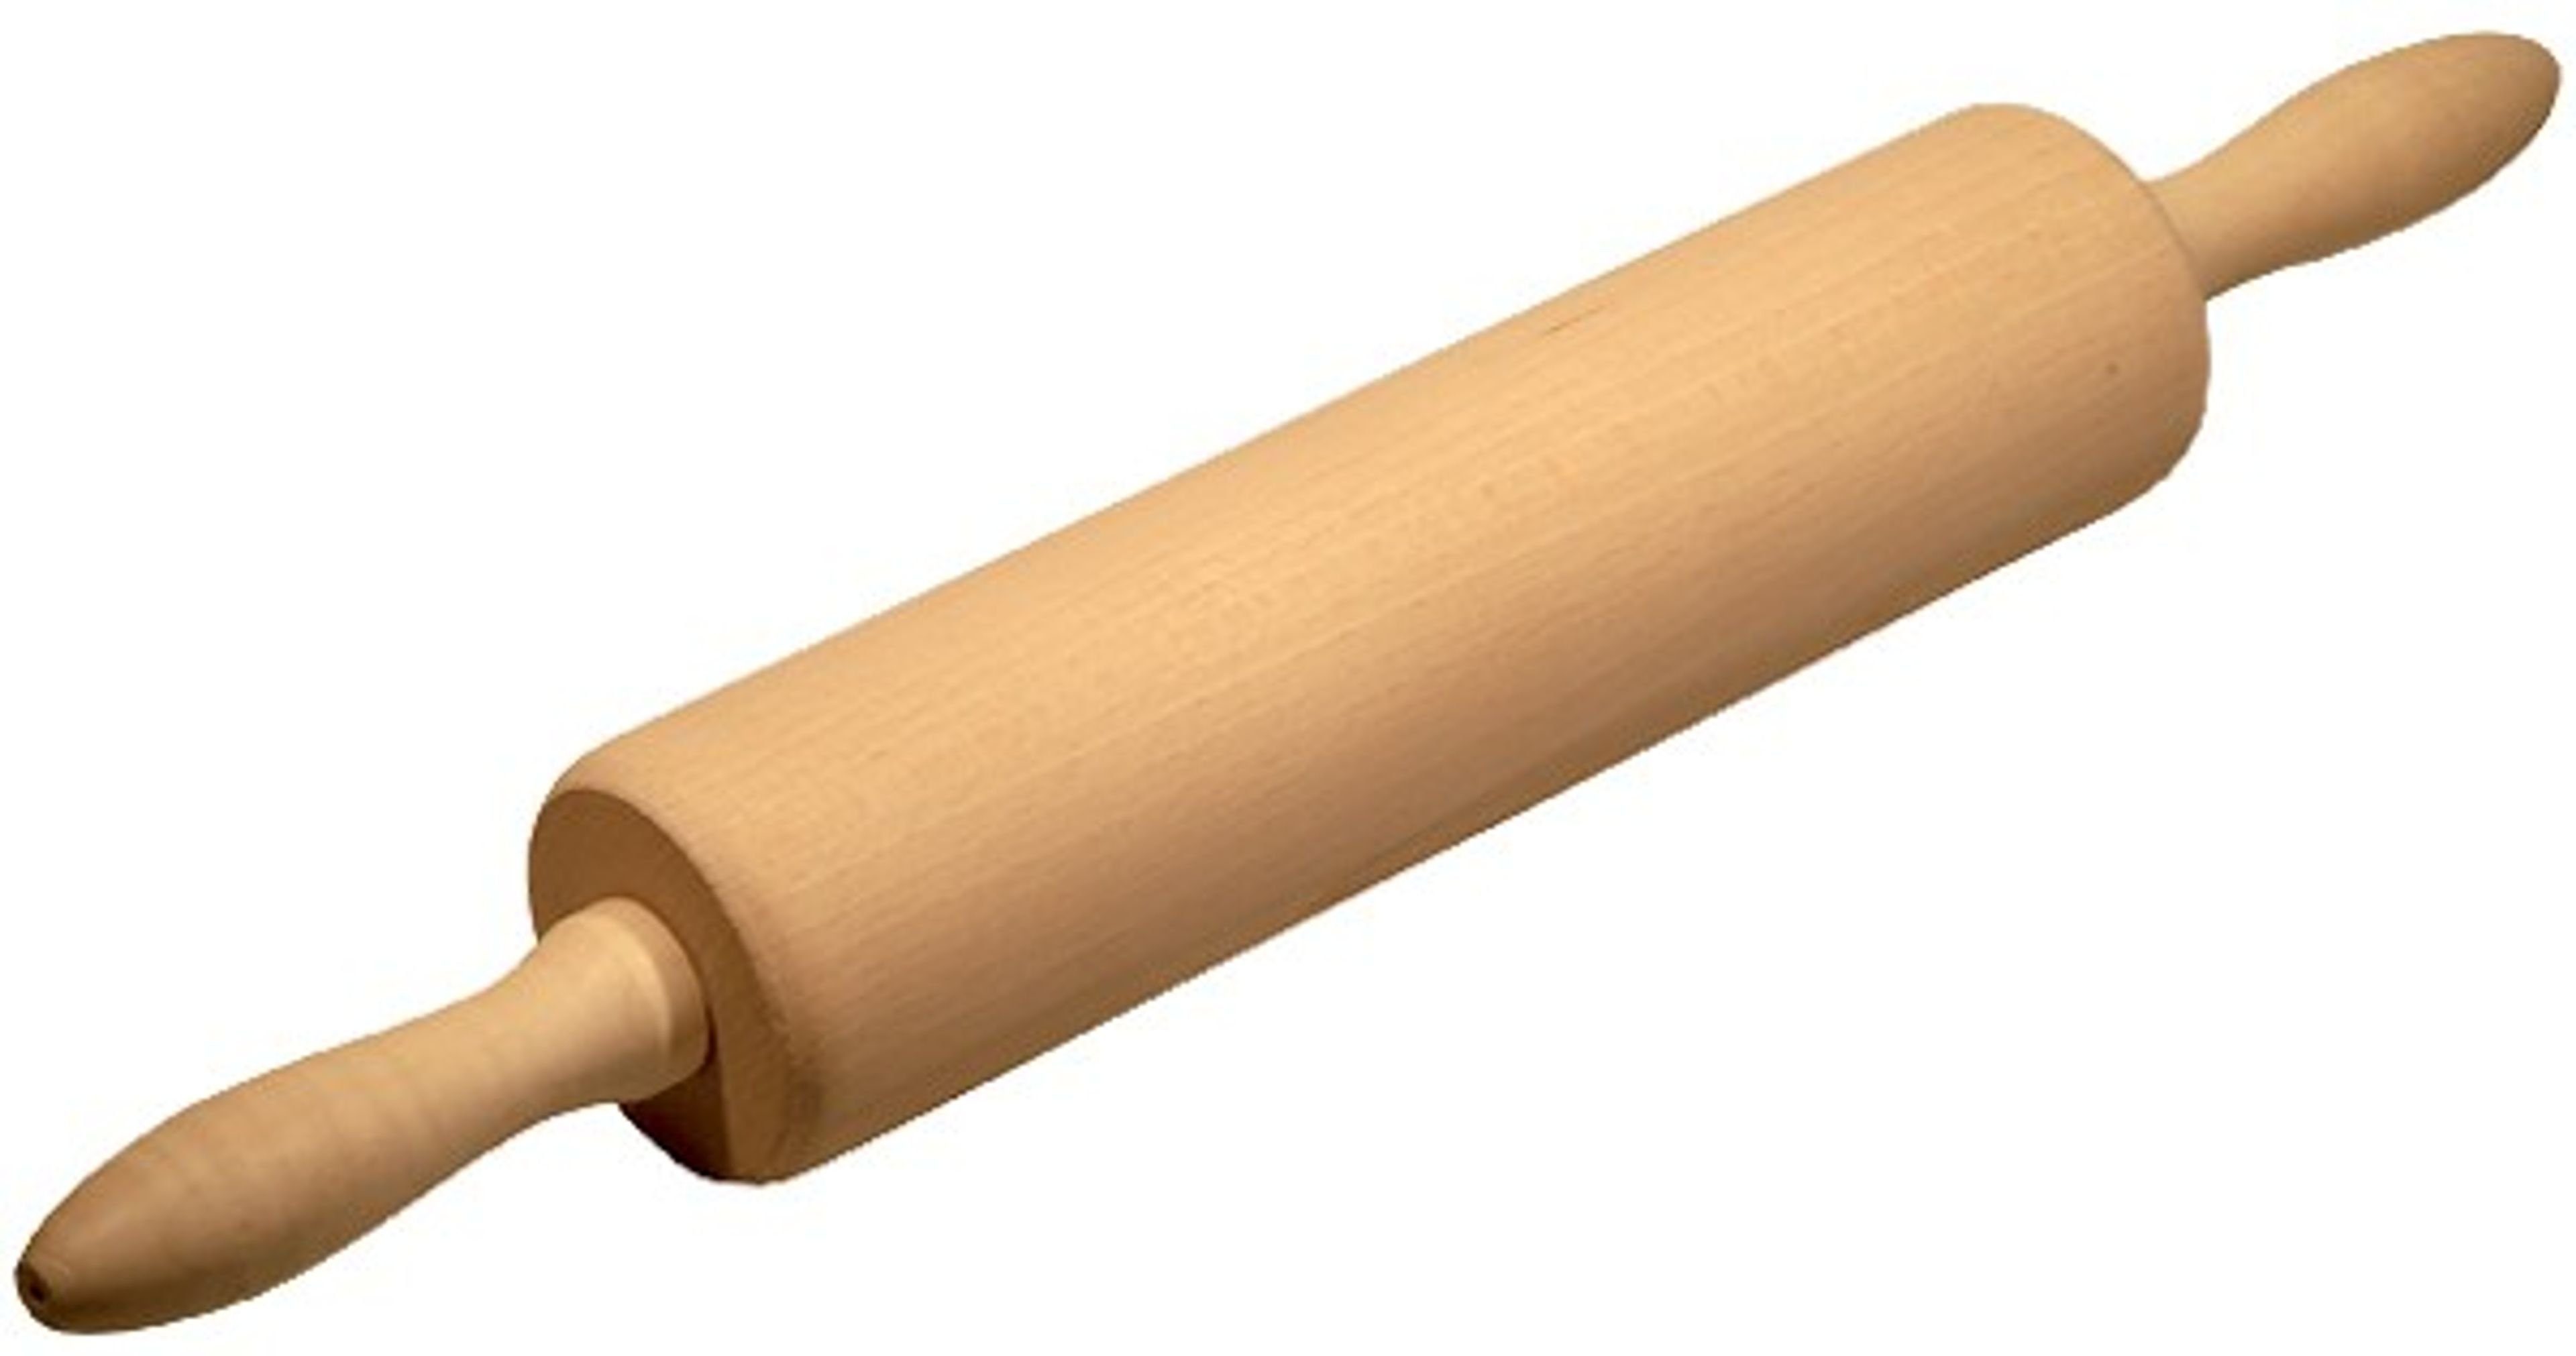 Gravidus Nudelholz Holz Teigroller Nudelholz mit Holzachse Walze L400xD55 mm